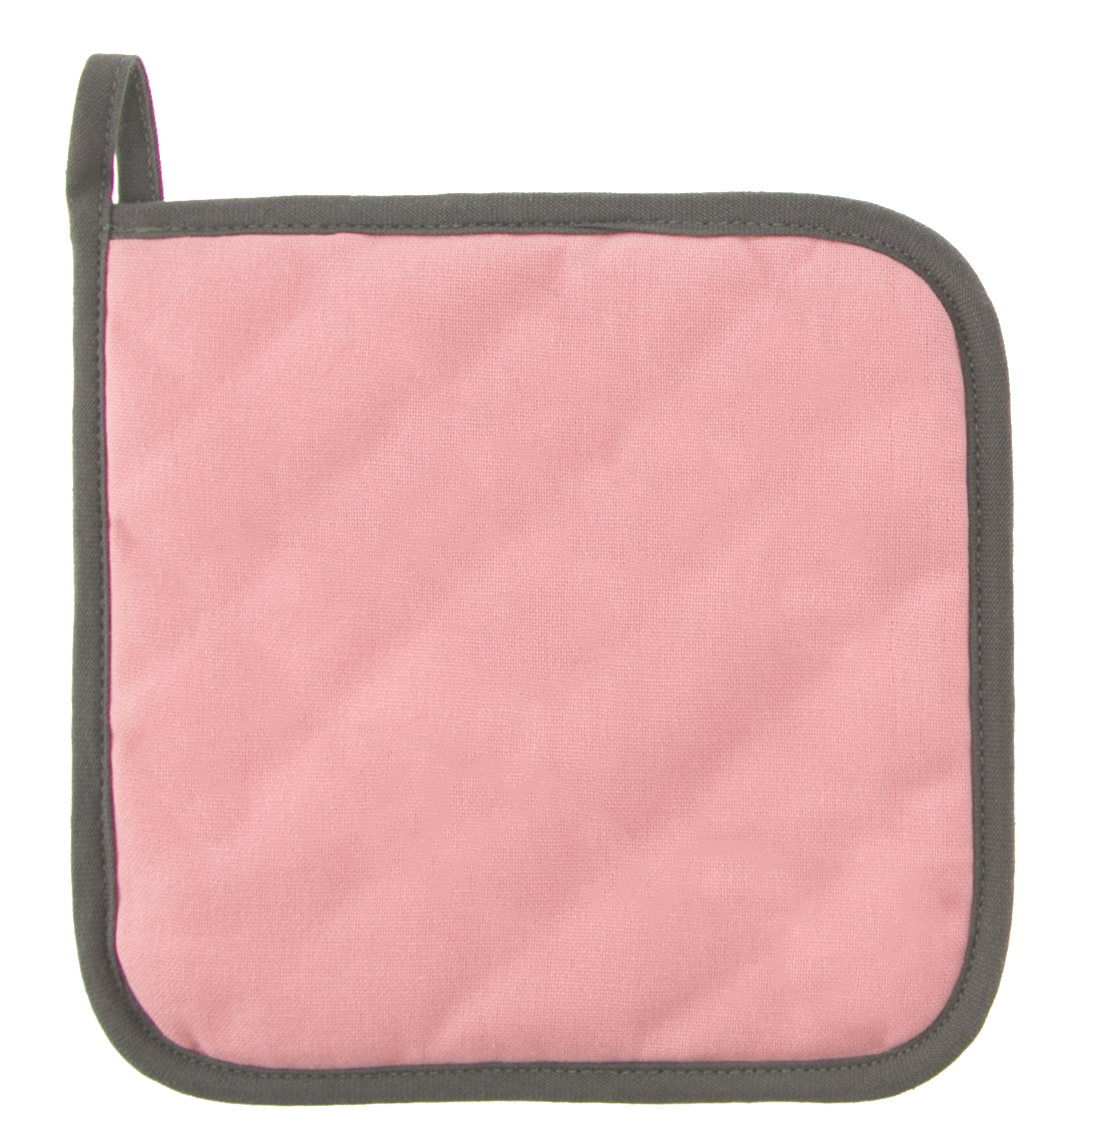 Pannenlap solid 20x20 met haak, soft pink set2